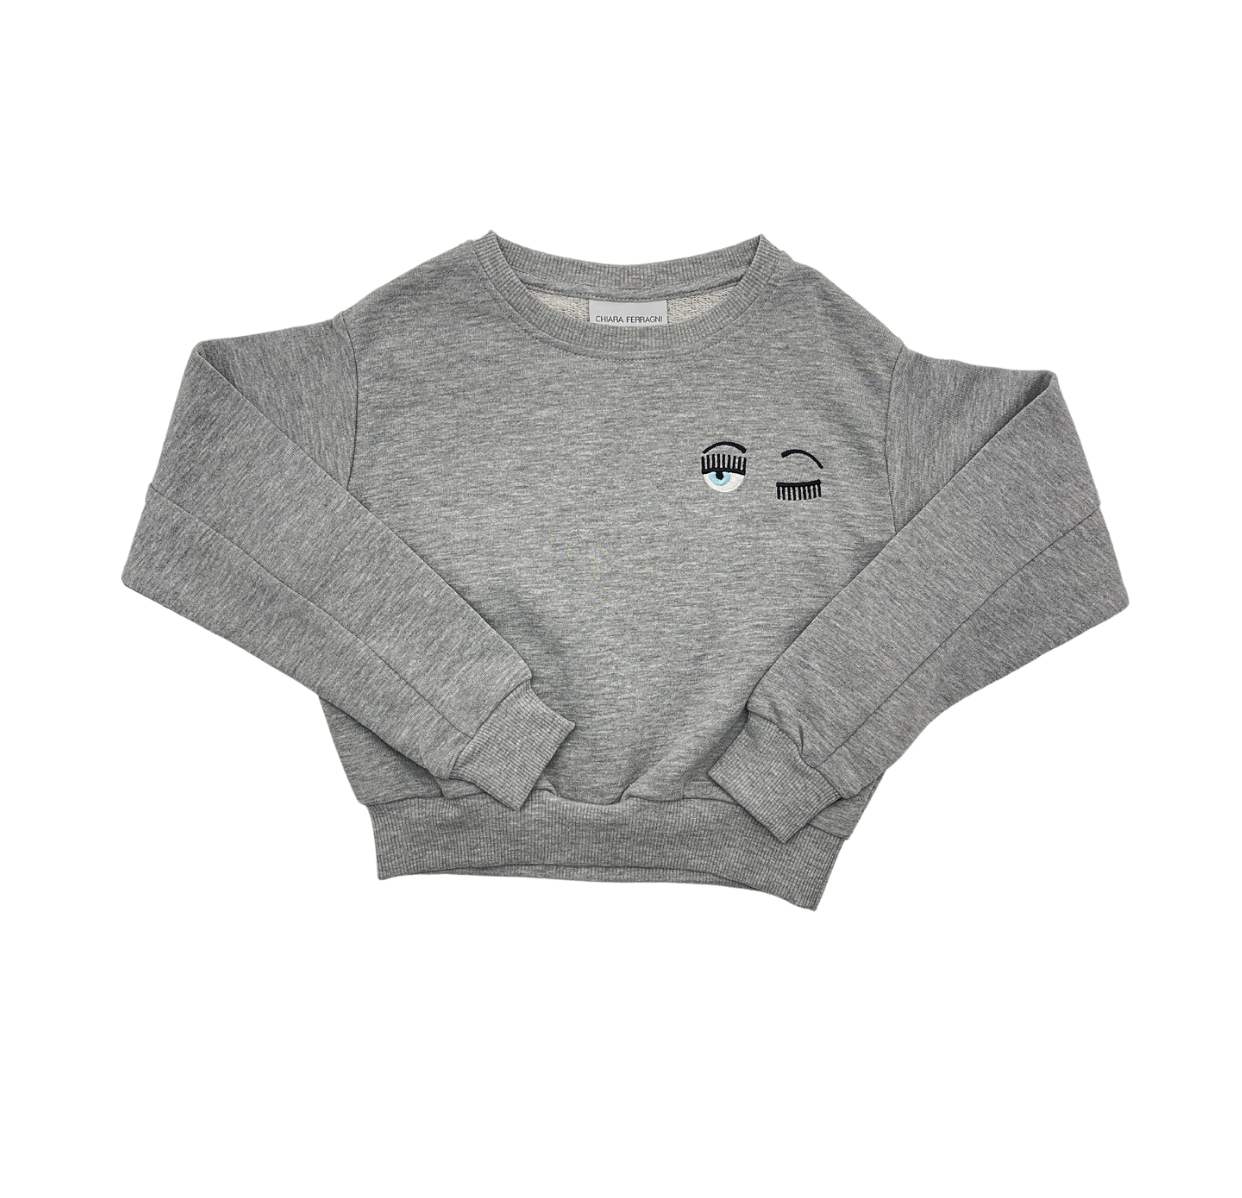 CHIARRA FERRAGNI - Gray sweatshirt - 5 years old